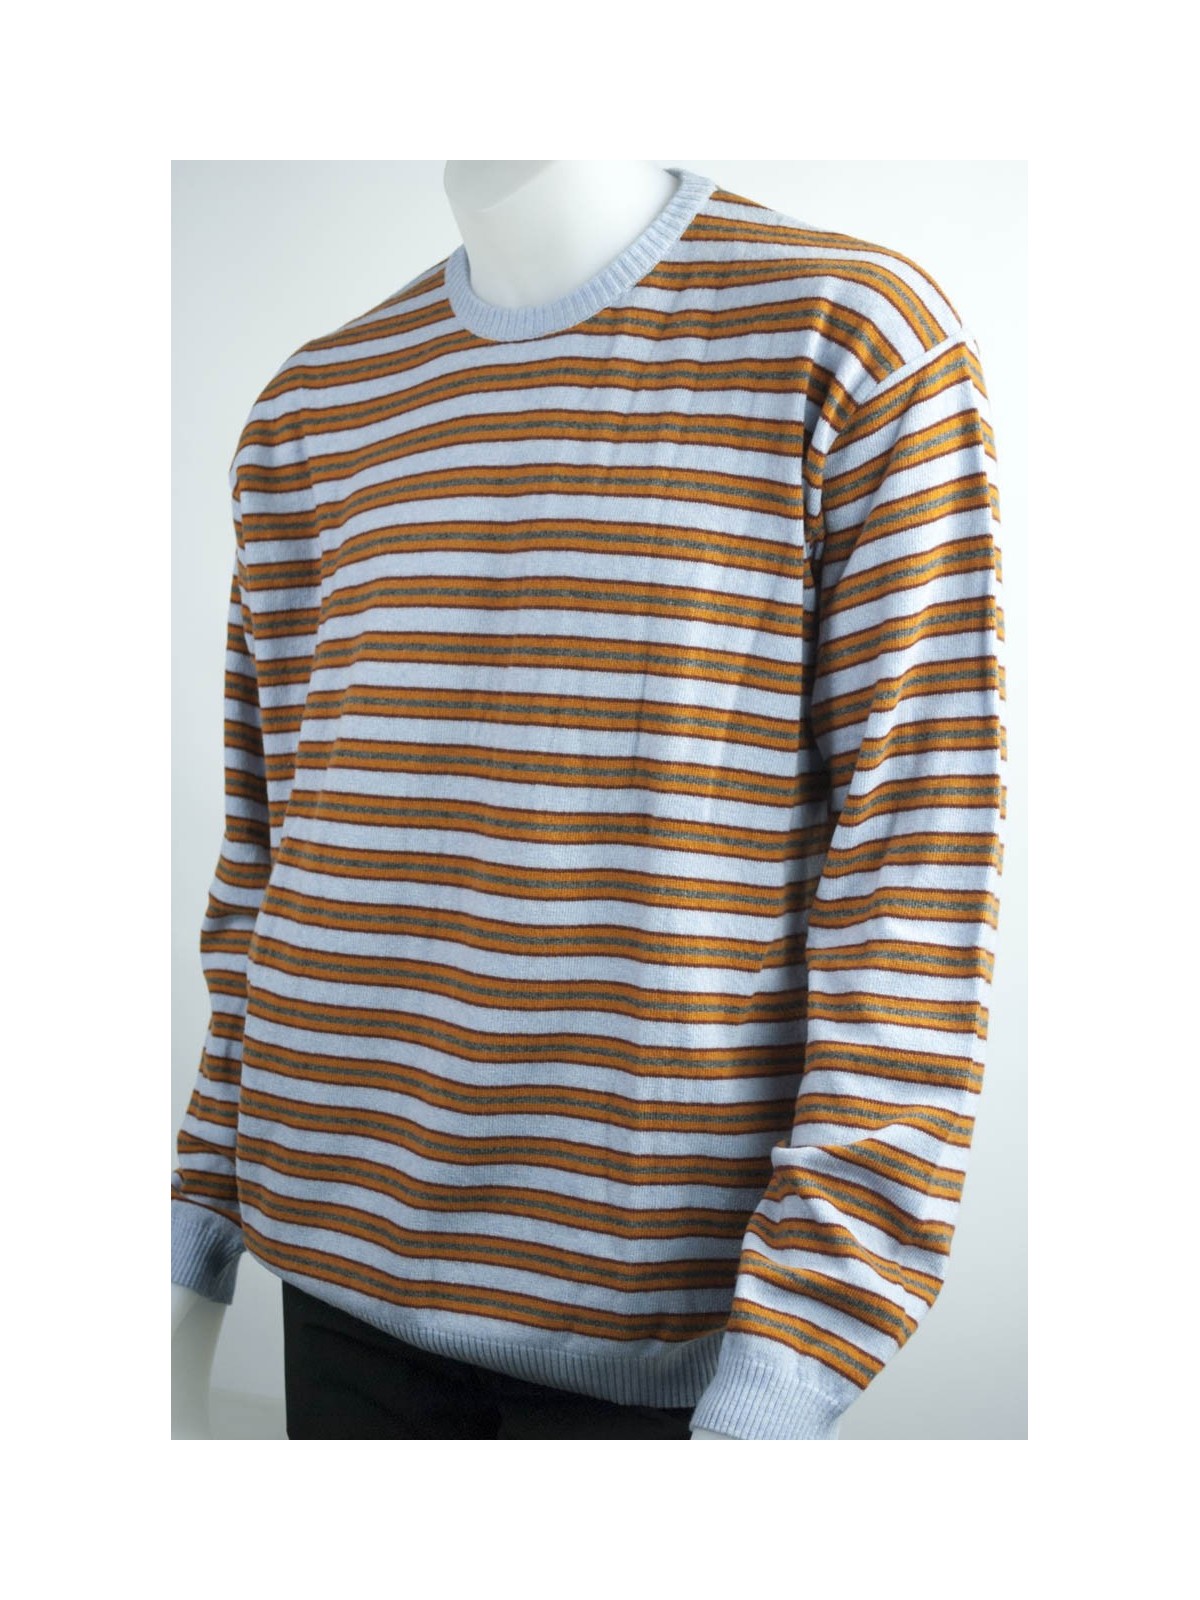 Sweater Hombre 56 3XL Celeste Naranja Gris Rayas Rojas - Mezcla Cashmere